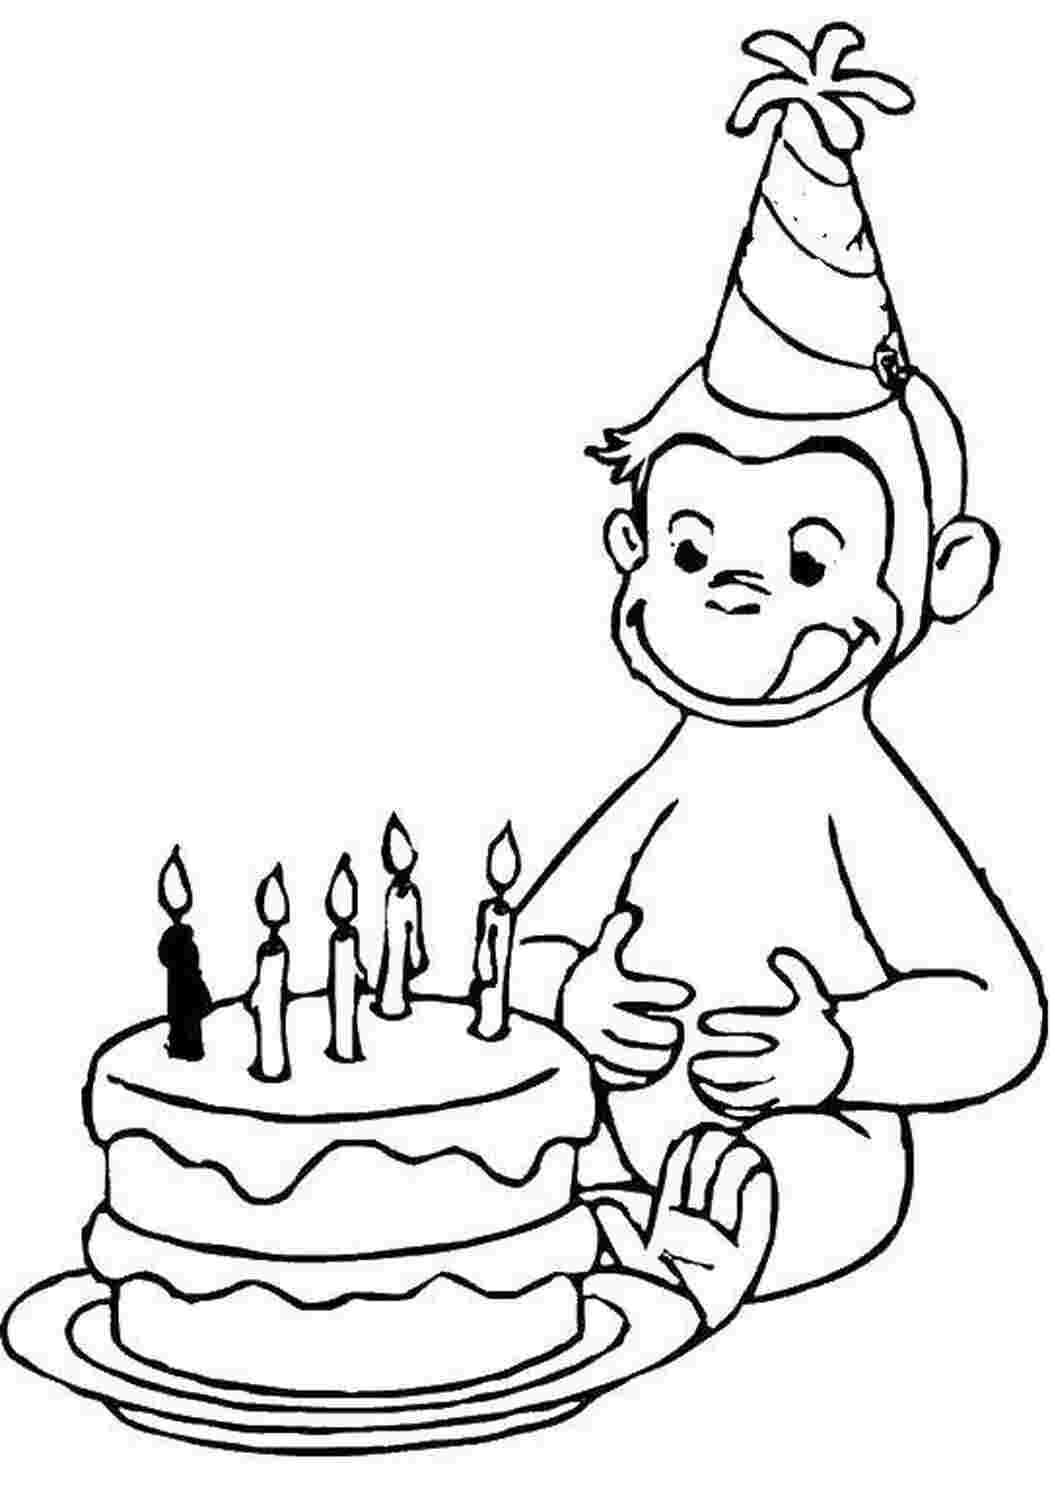 Раскраски Обезьянка и торт со свечами раскраски обезьянка, торт, свечи